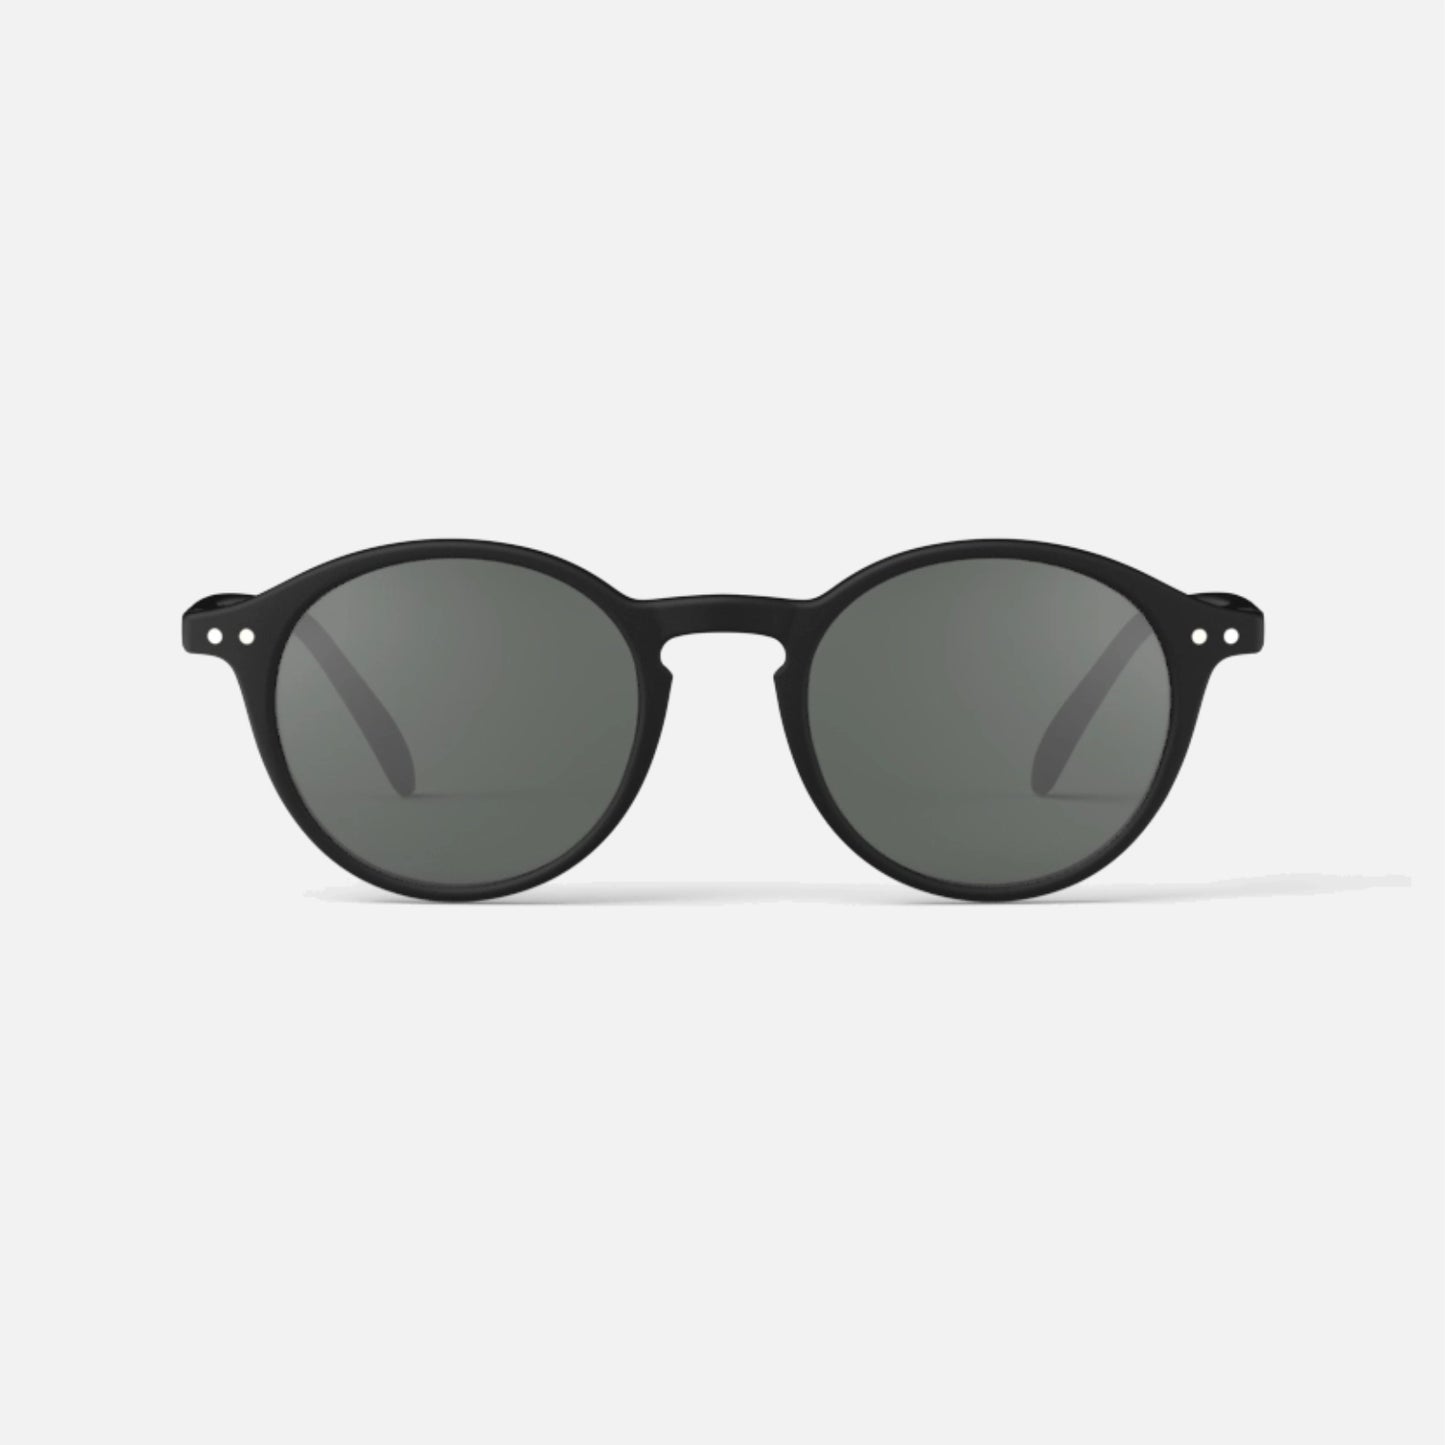 Model D solbriller fra Izipizi i sort forfra